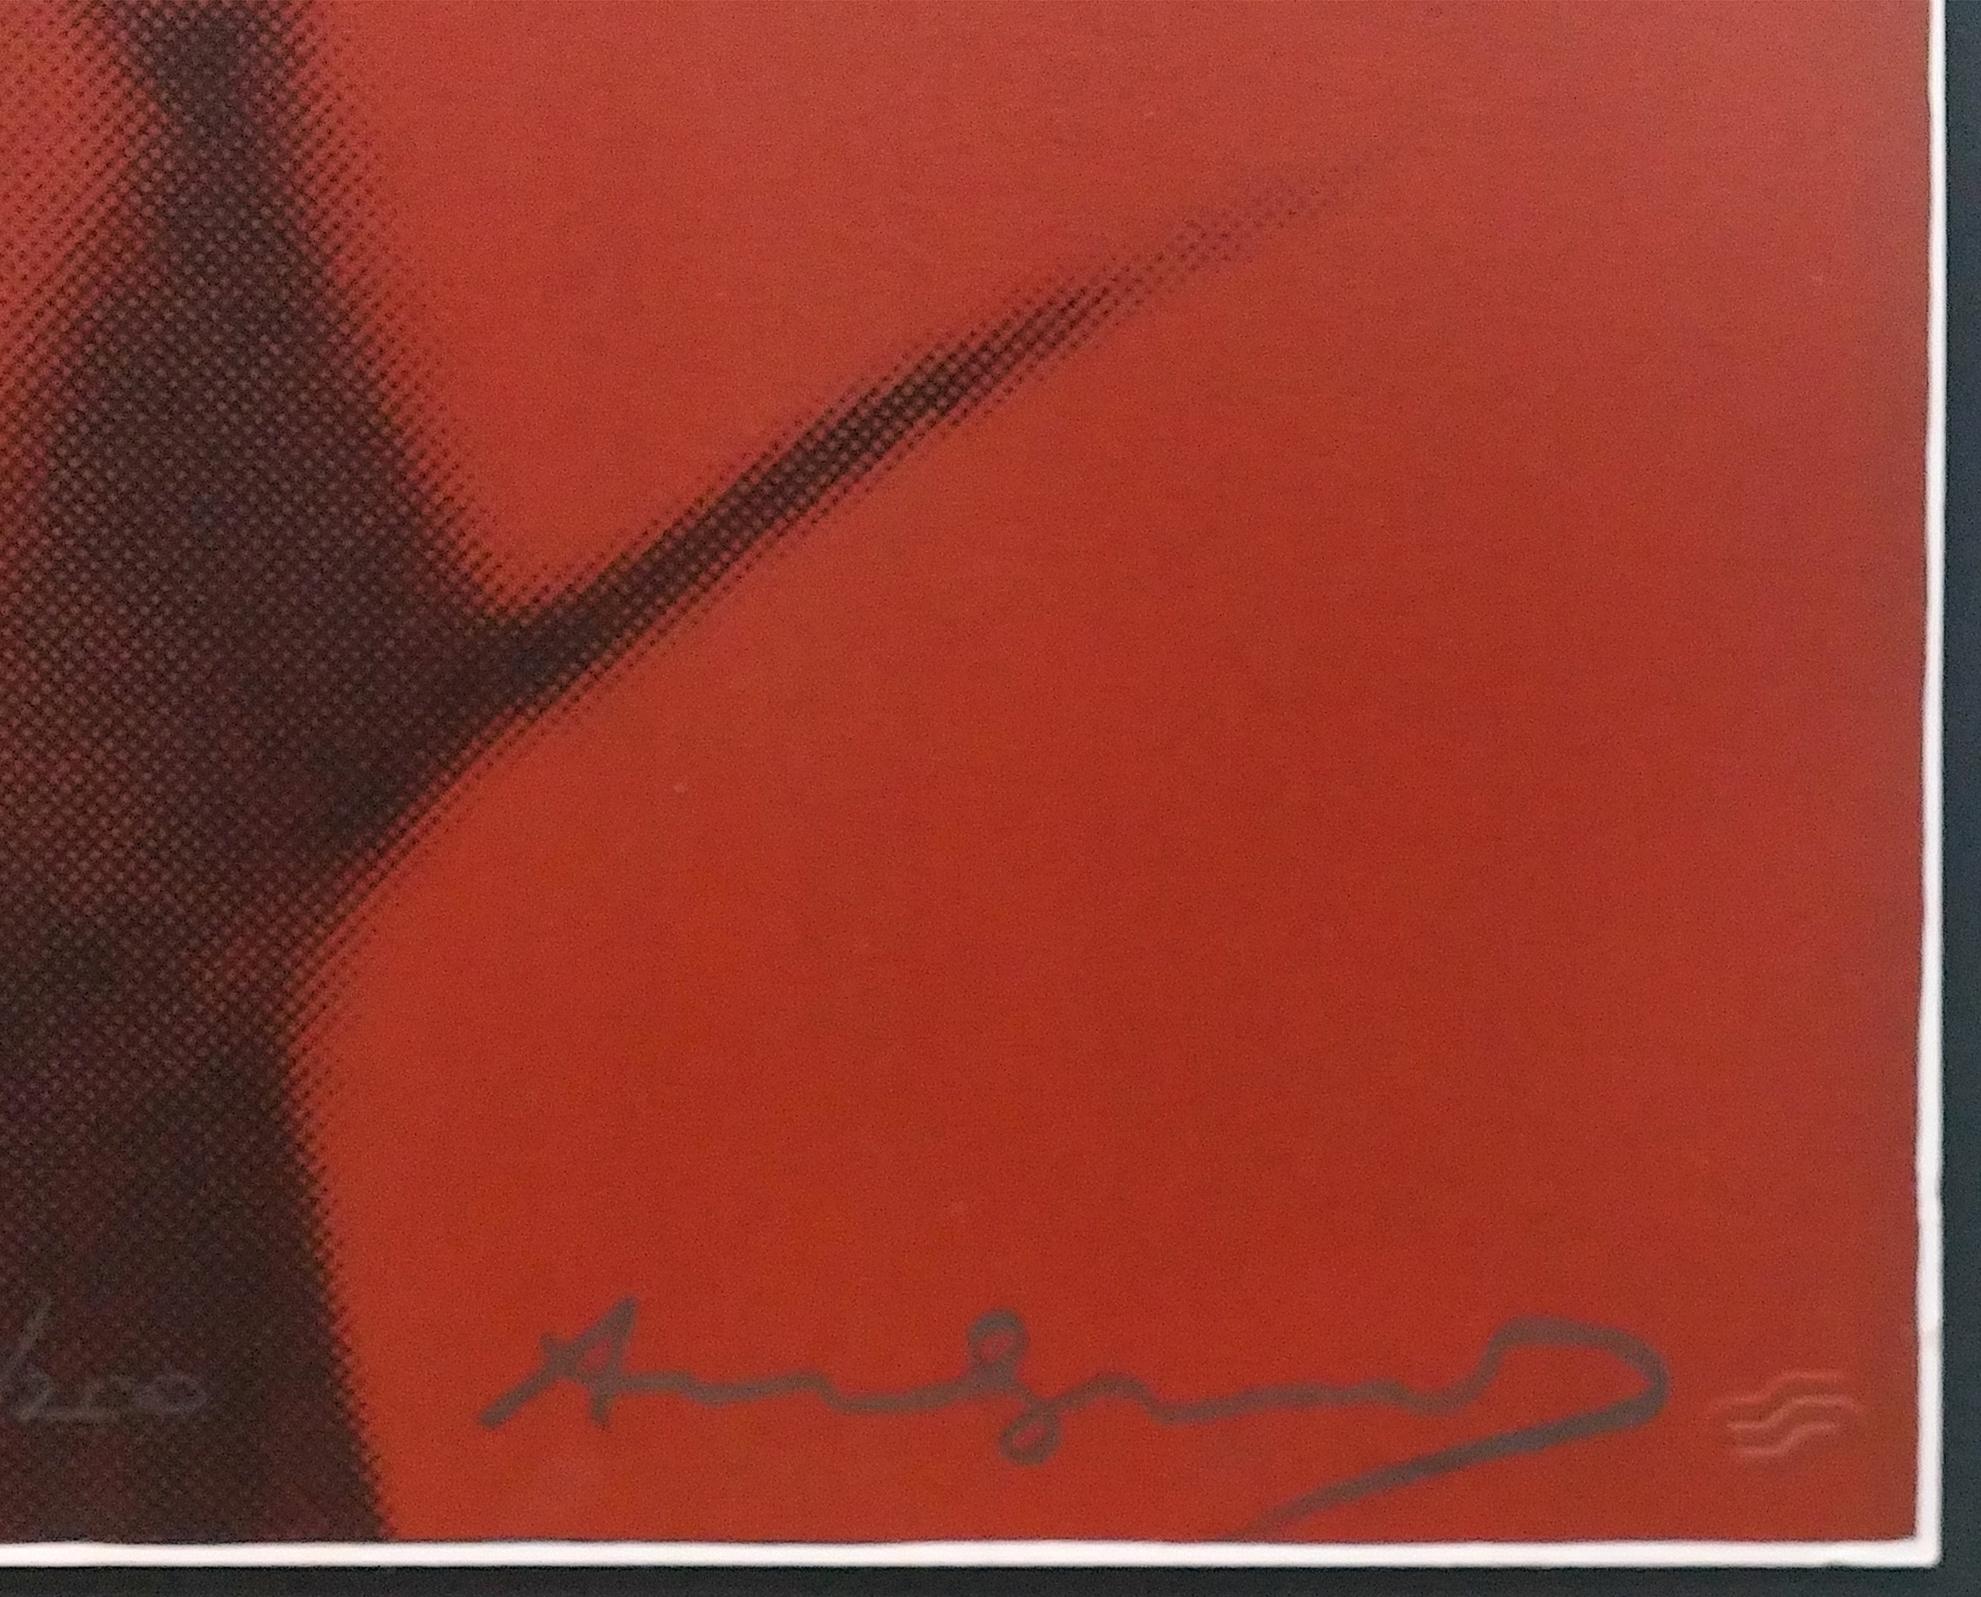 MYTHS: II.267: THE SHADOW - Print by Andy Warhol